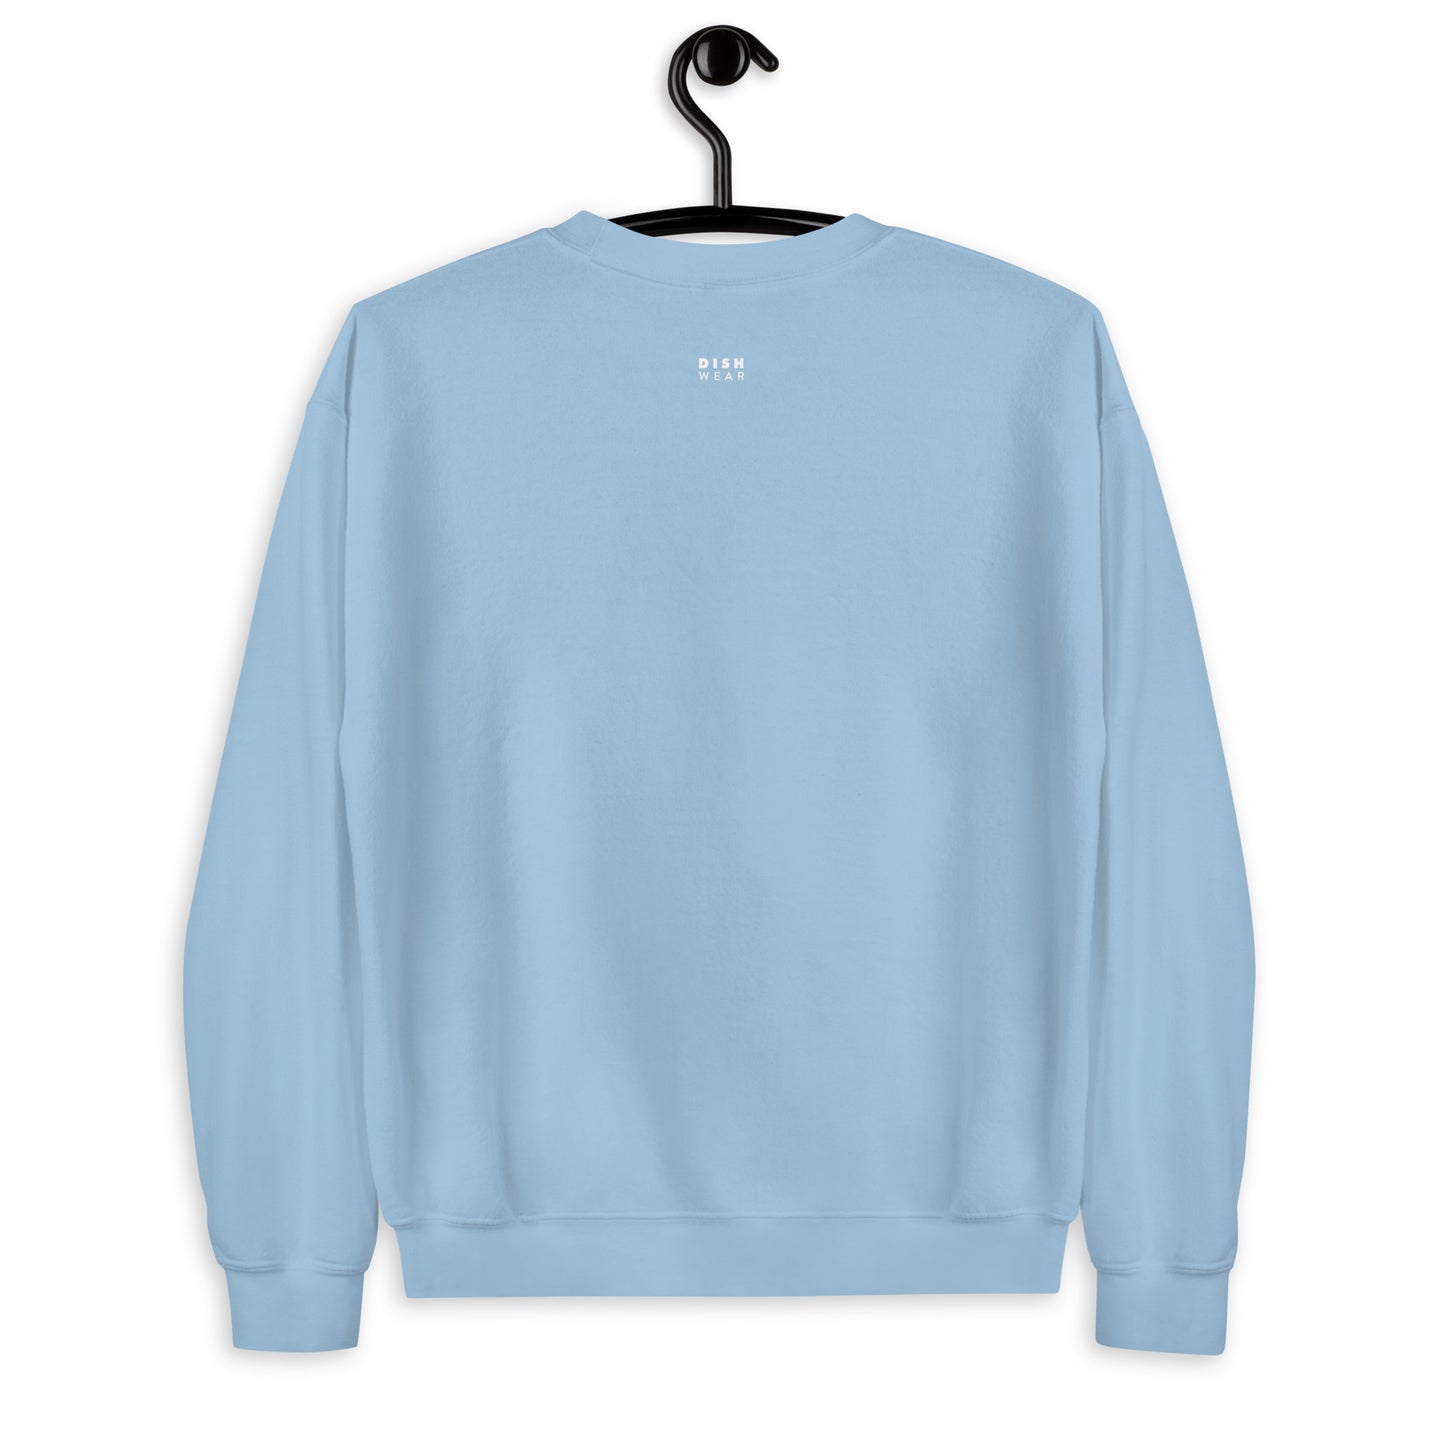 Honey Sweatshirt - Arched Font